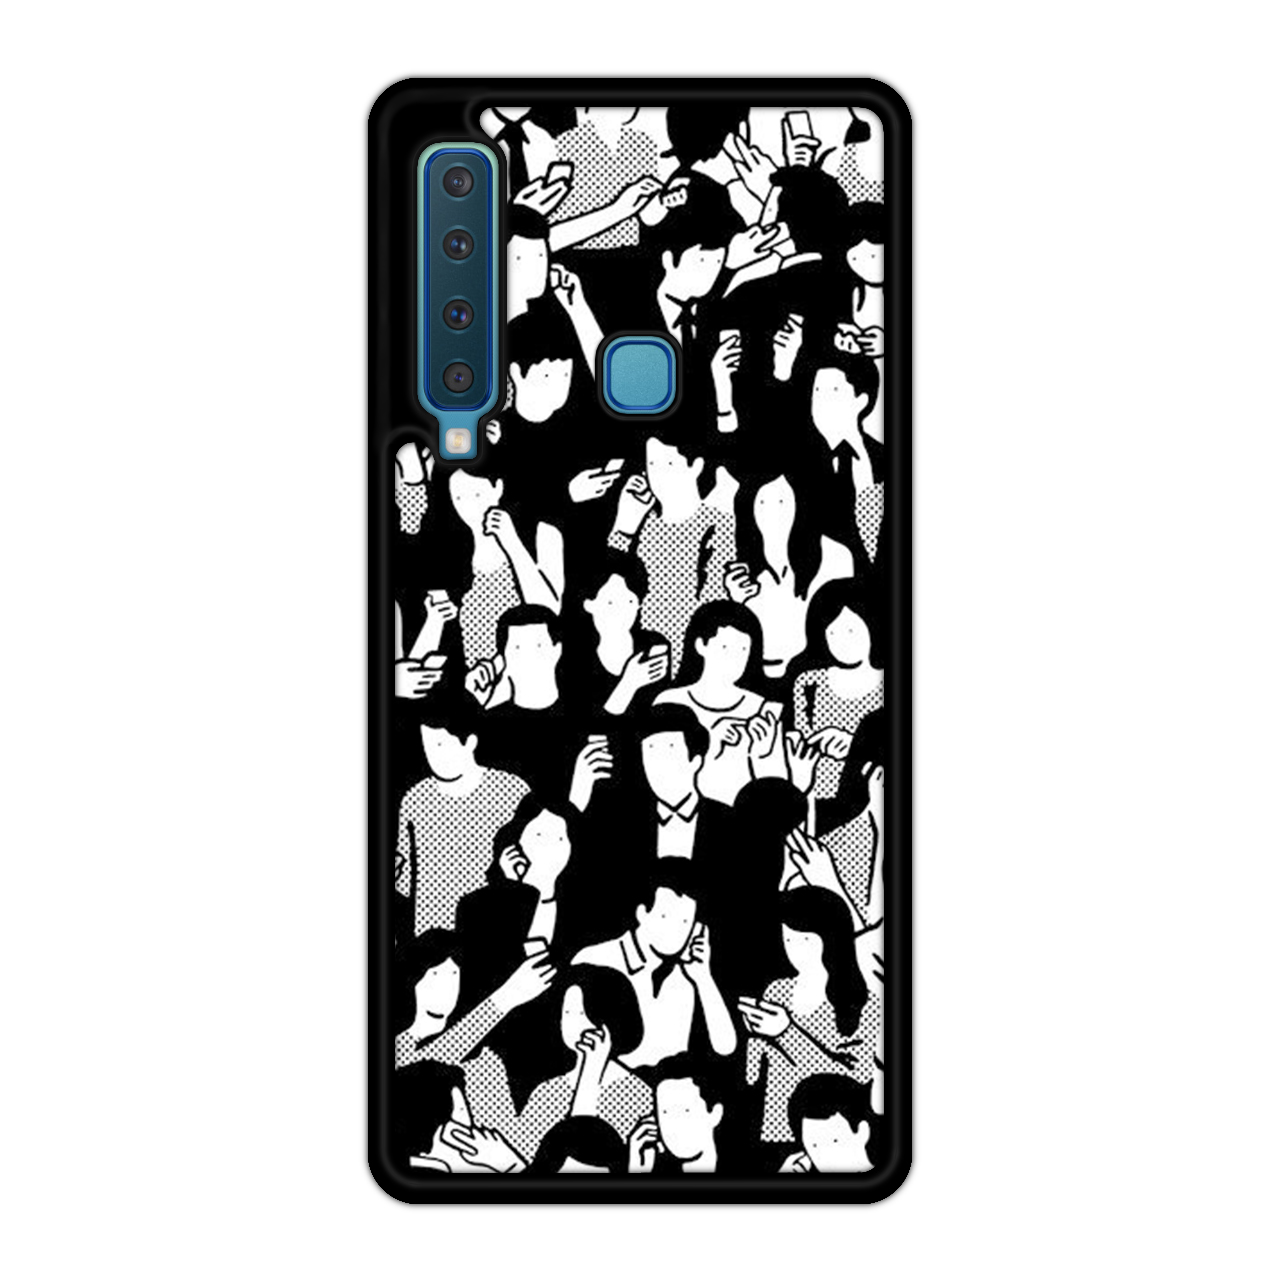 کاور آکام مدل Aanin2258 مناسب برای گوشی موبایل سامسونگ Galaxy A9 2018